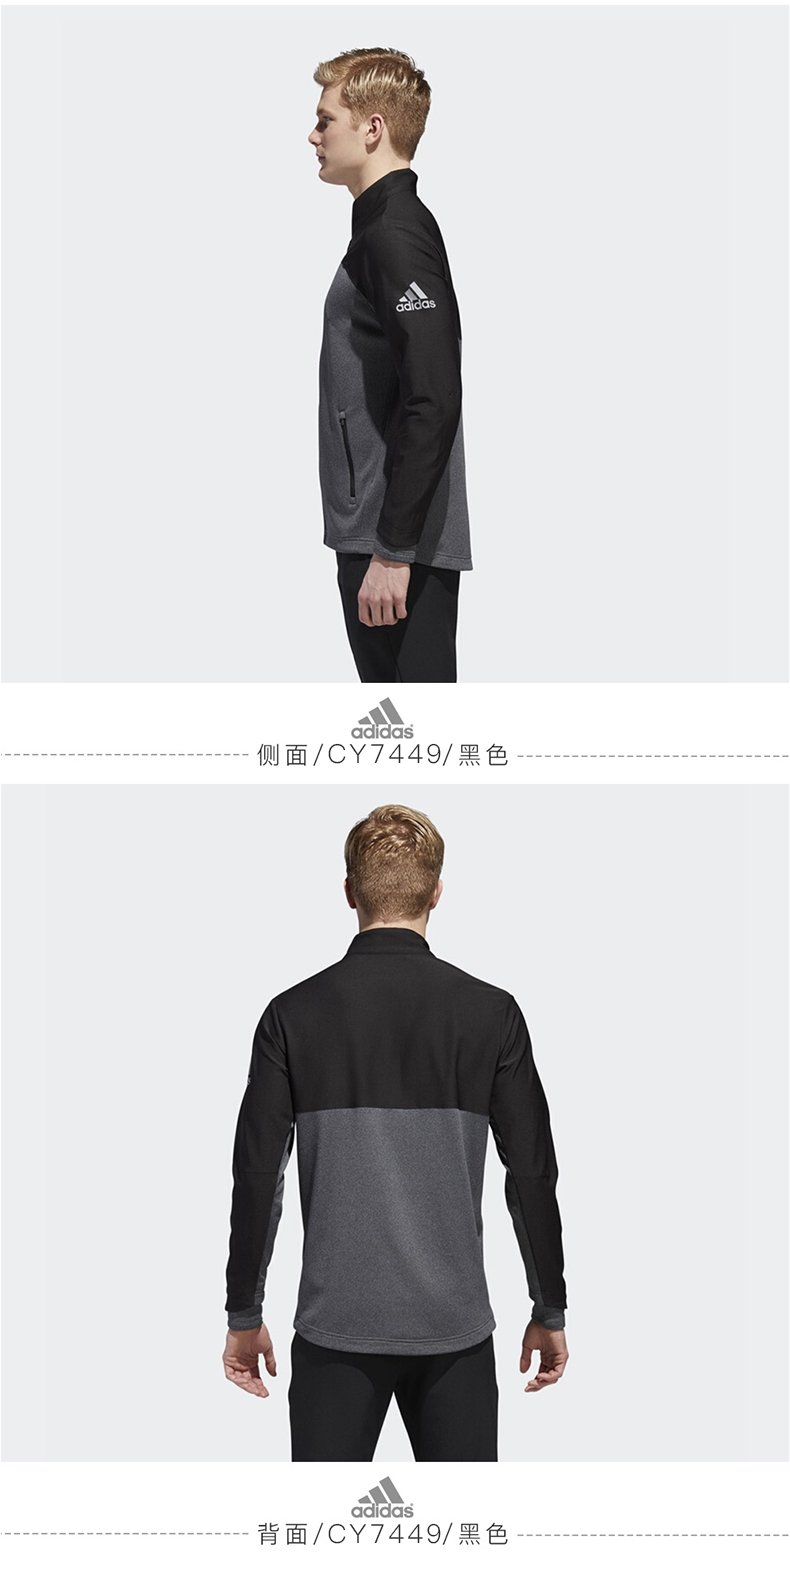 Adidas阿迪达斯高尔夫外套服装新款春秋防风长袖夹克CY7449